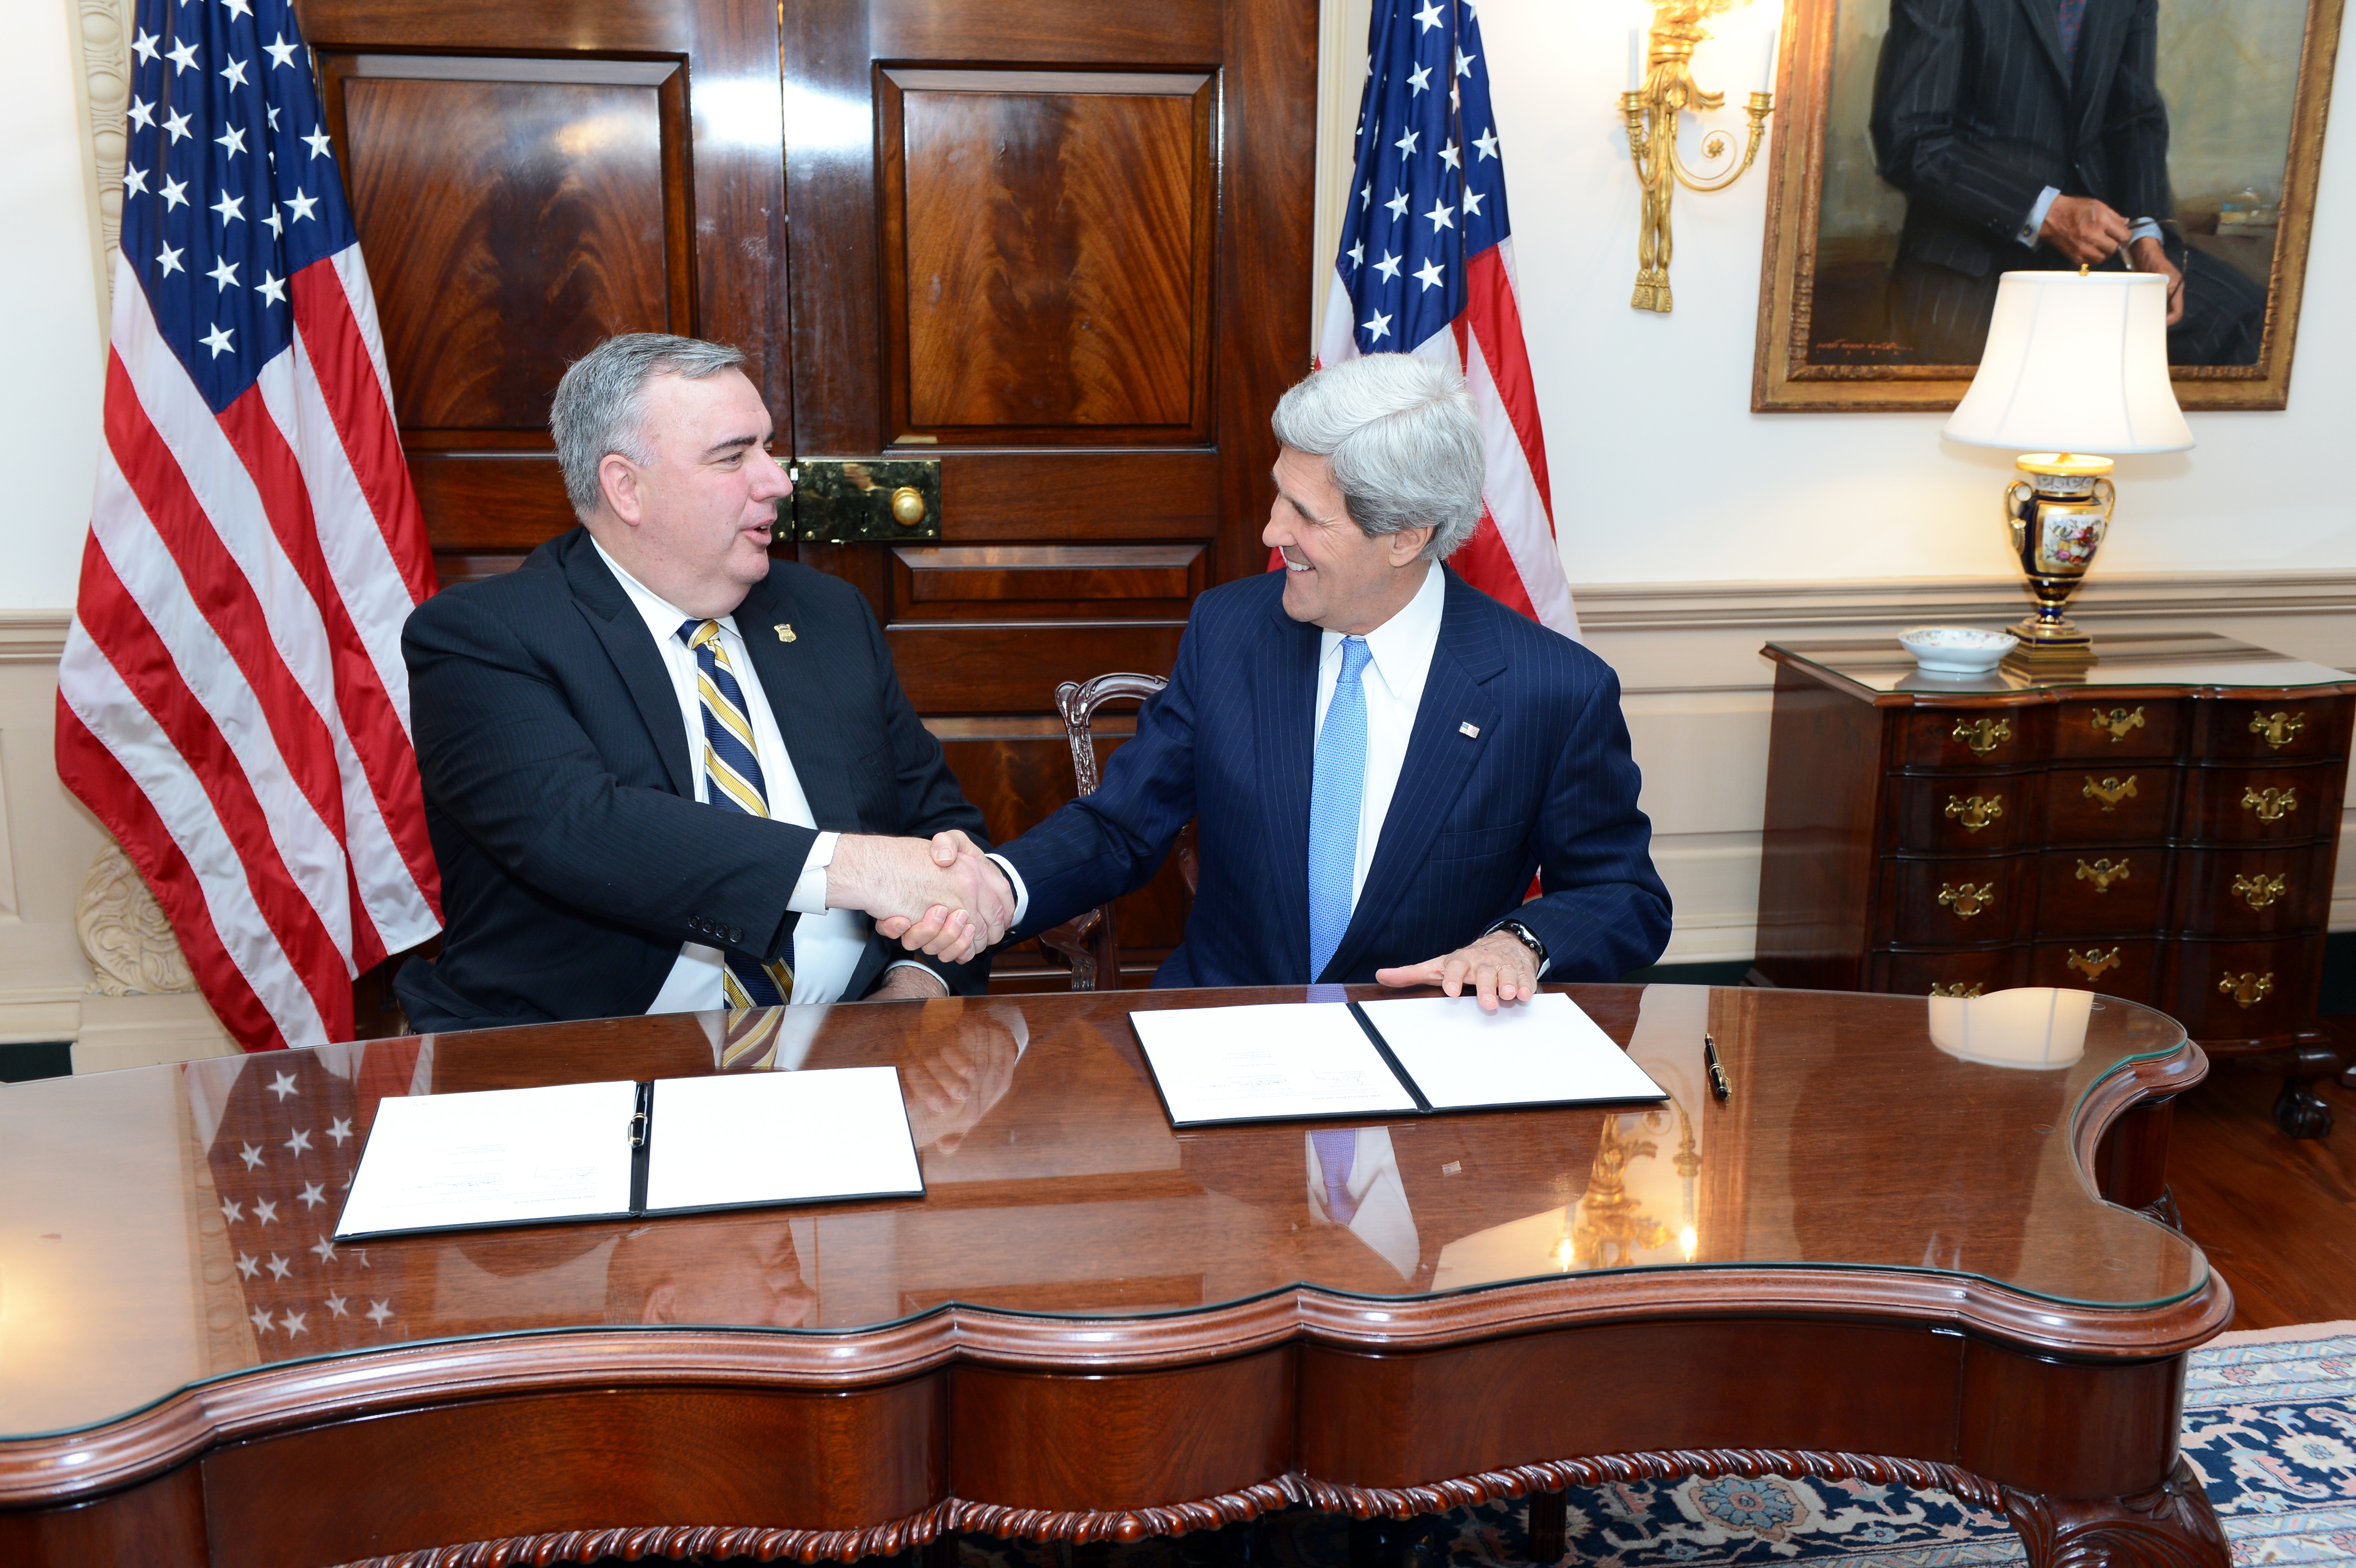 Secretary Kerry and Boston Police Commissioner Davis Shake Hands